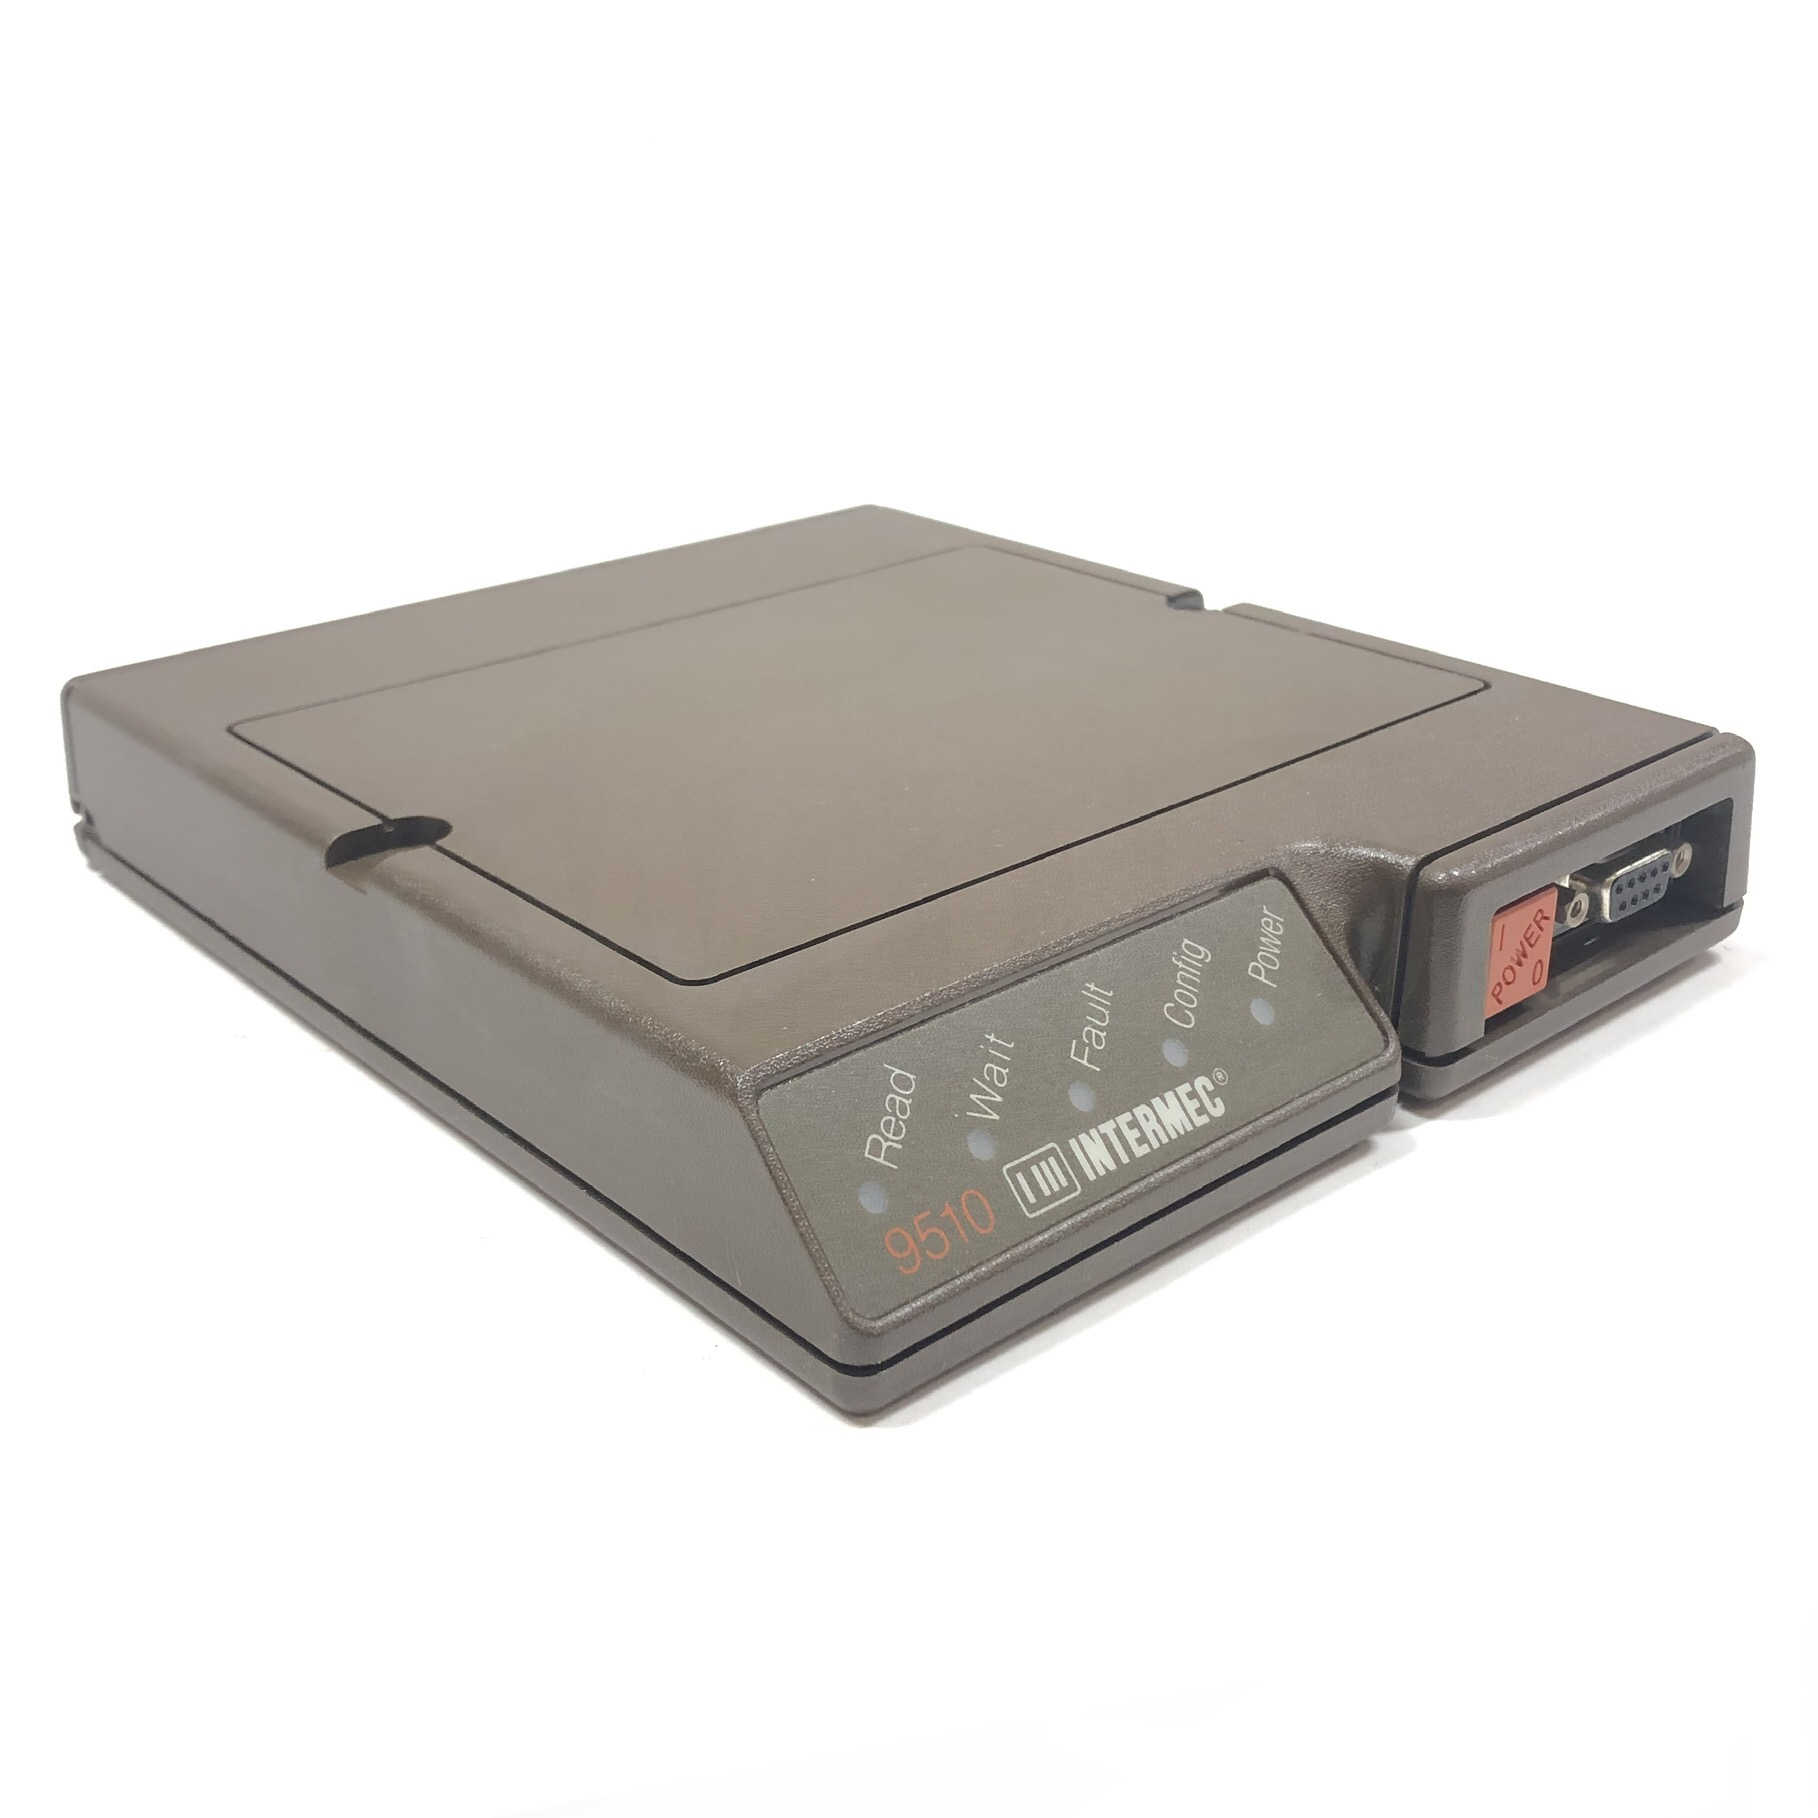 9510 Intermec Laser Reader, Bar Code Scanner 2